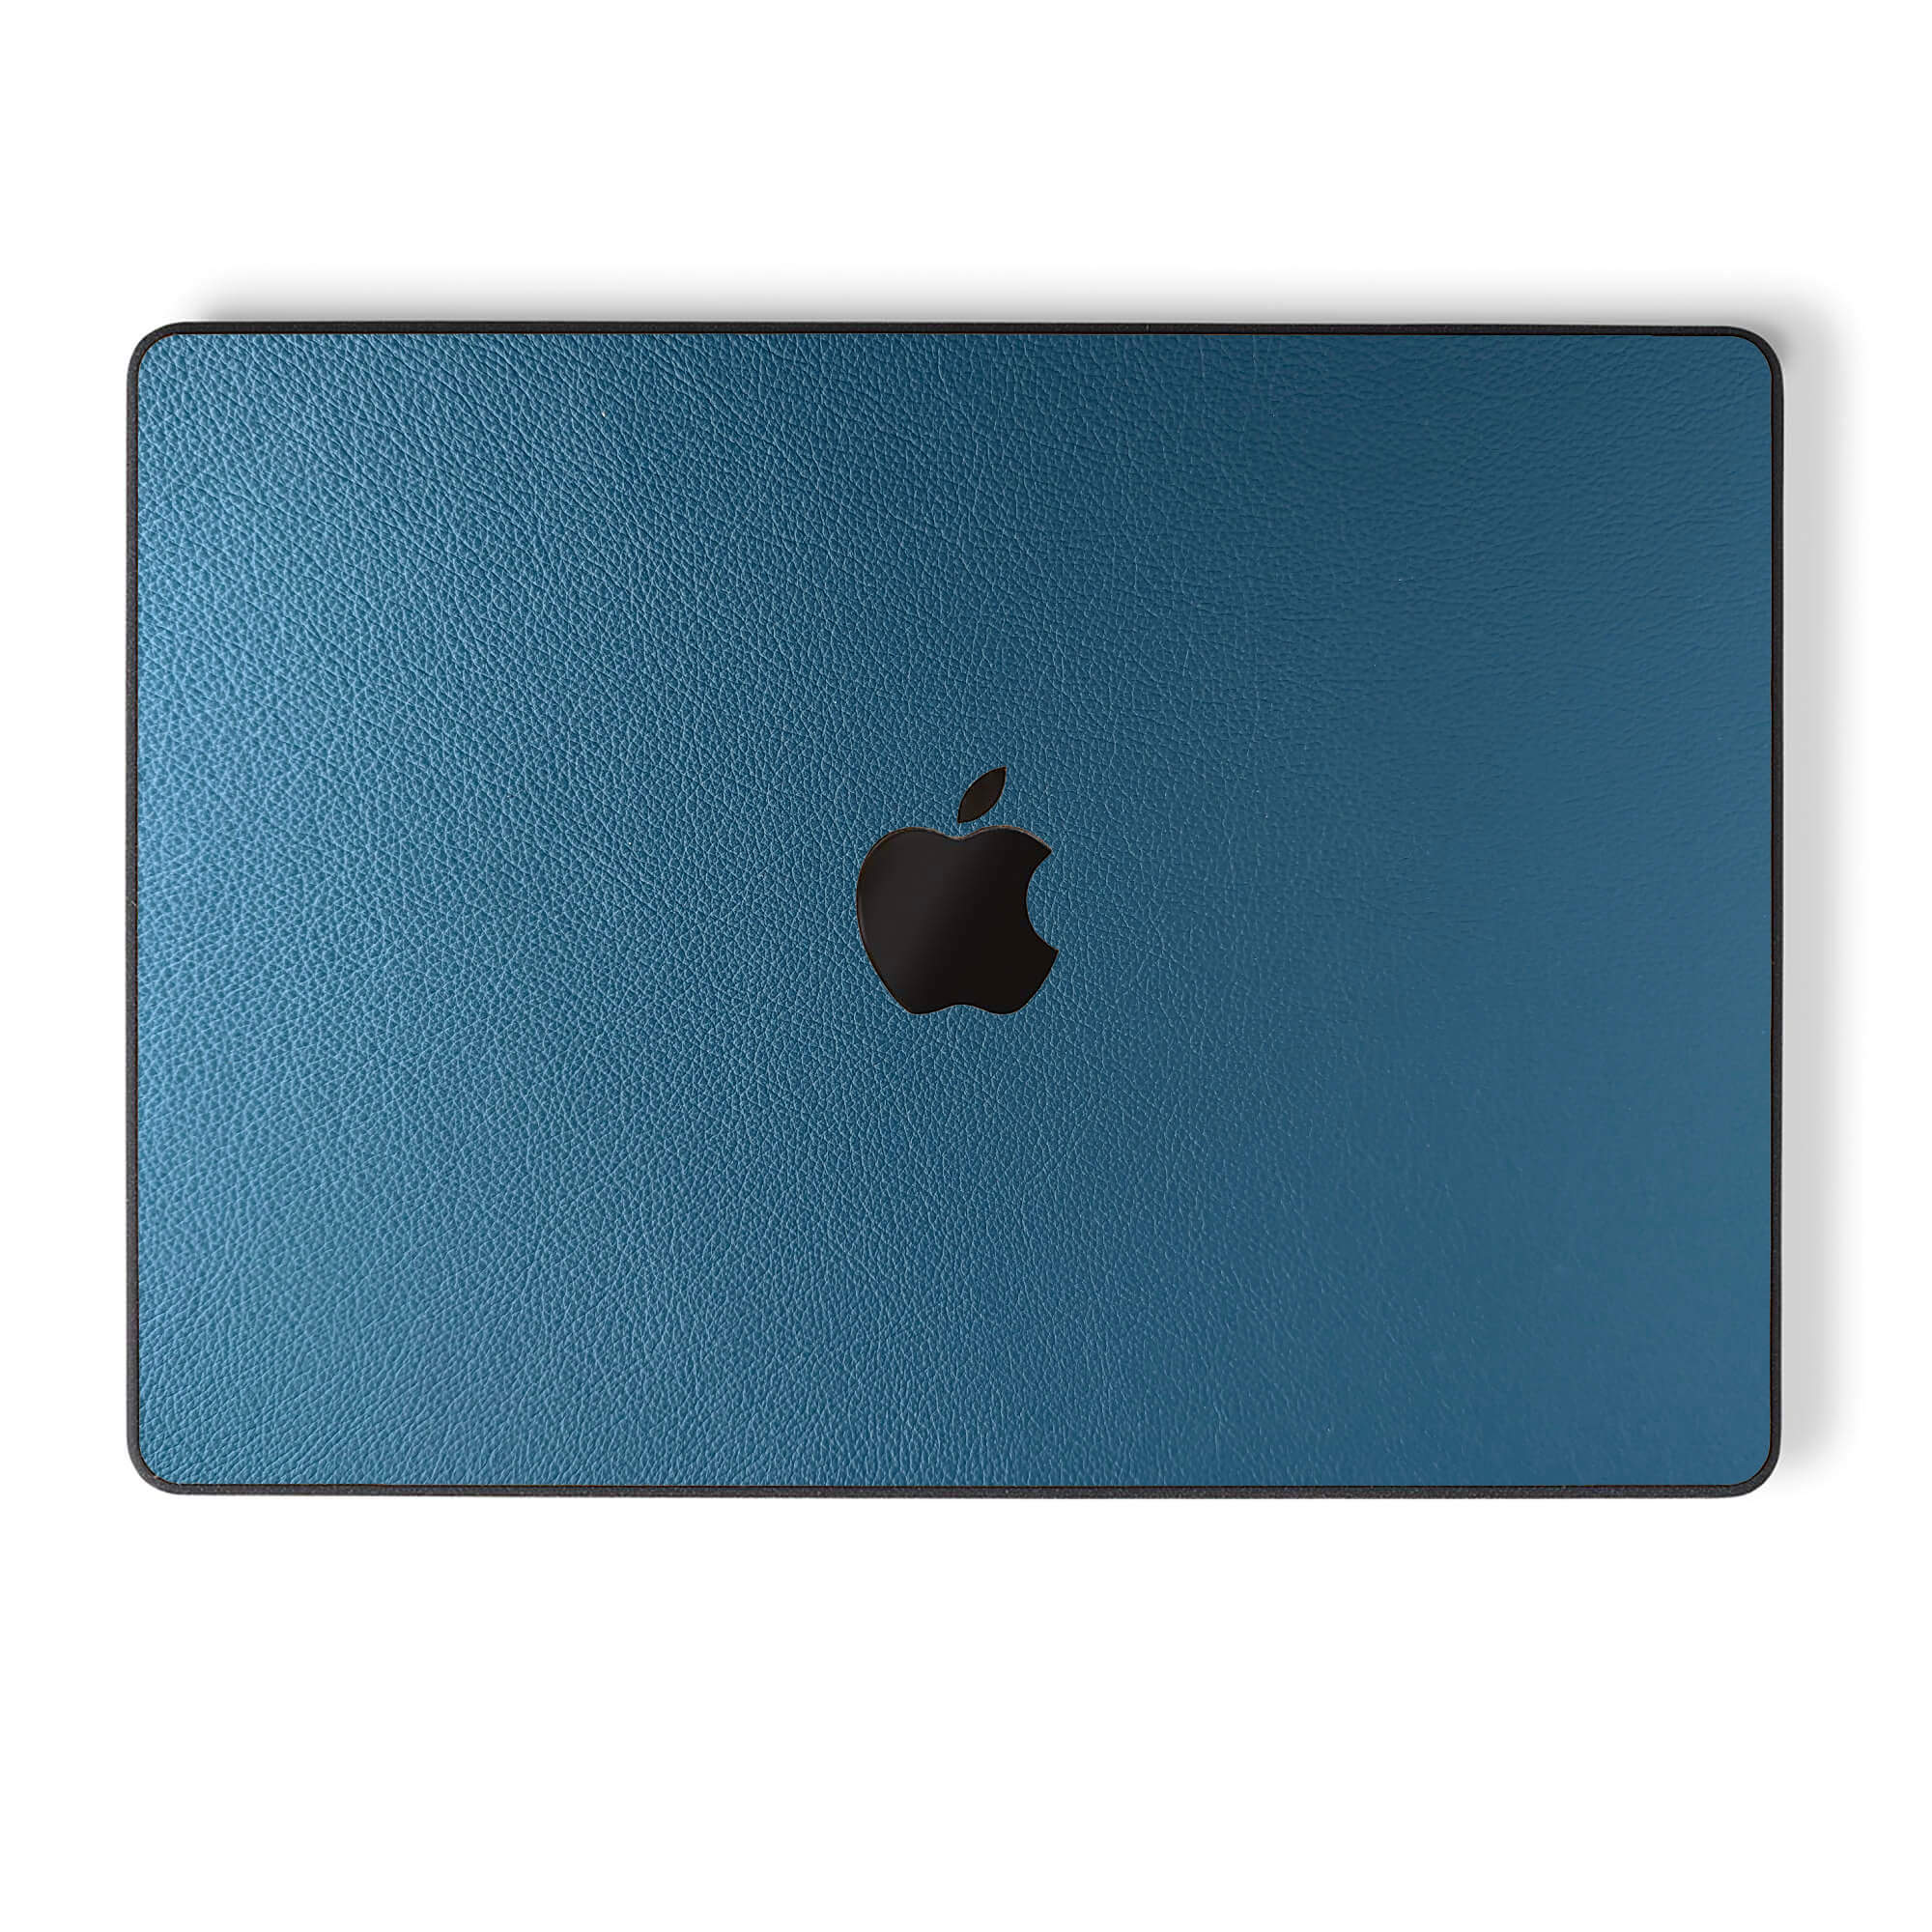 alt:Leather MacBook Case | var:cobaltblue |